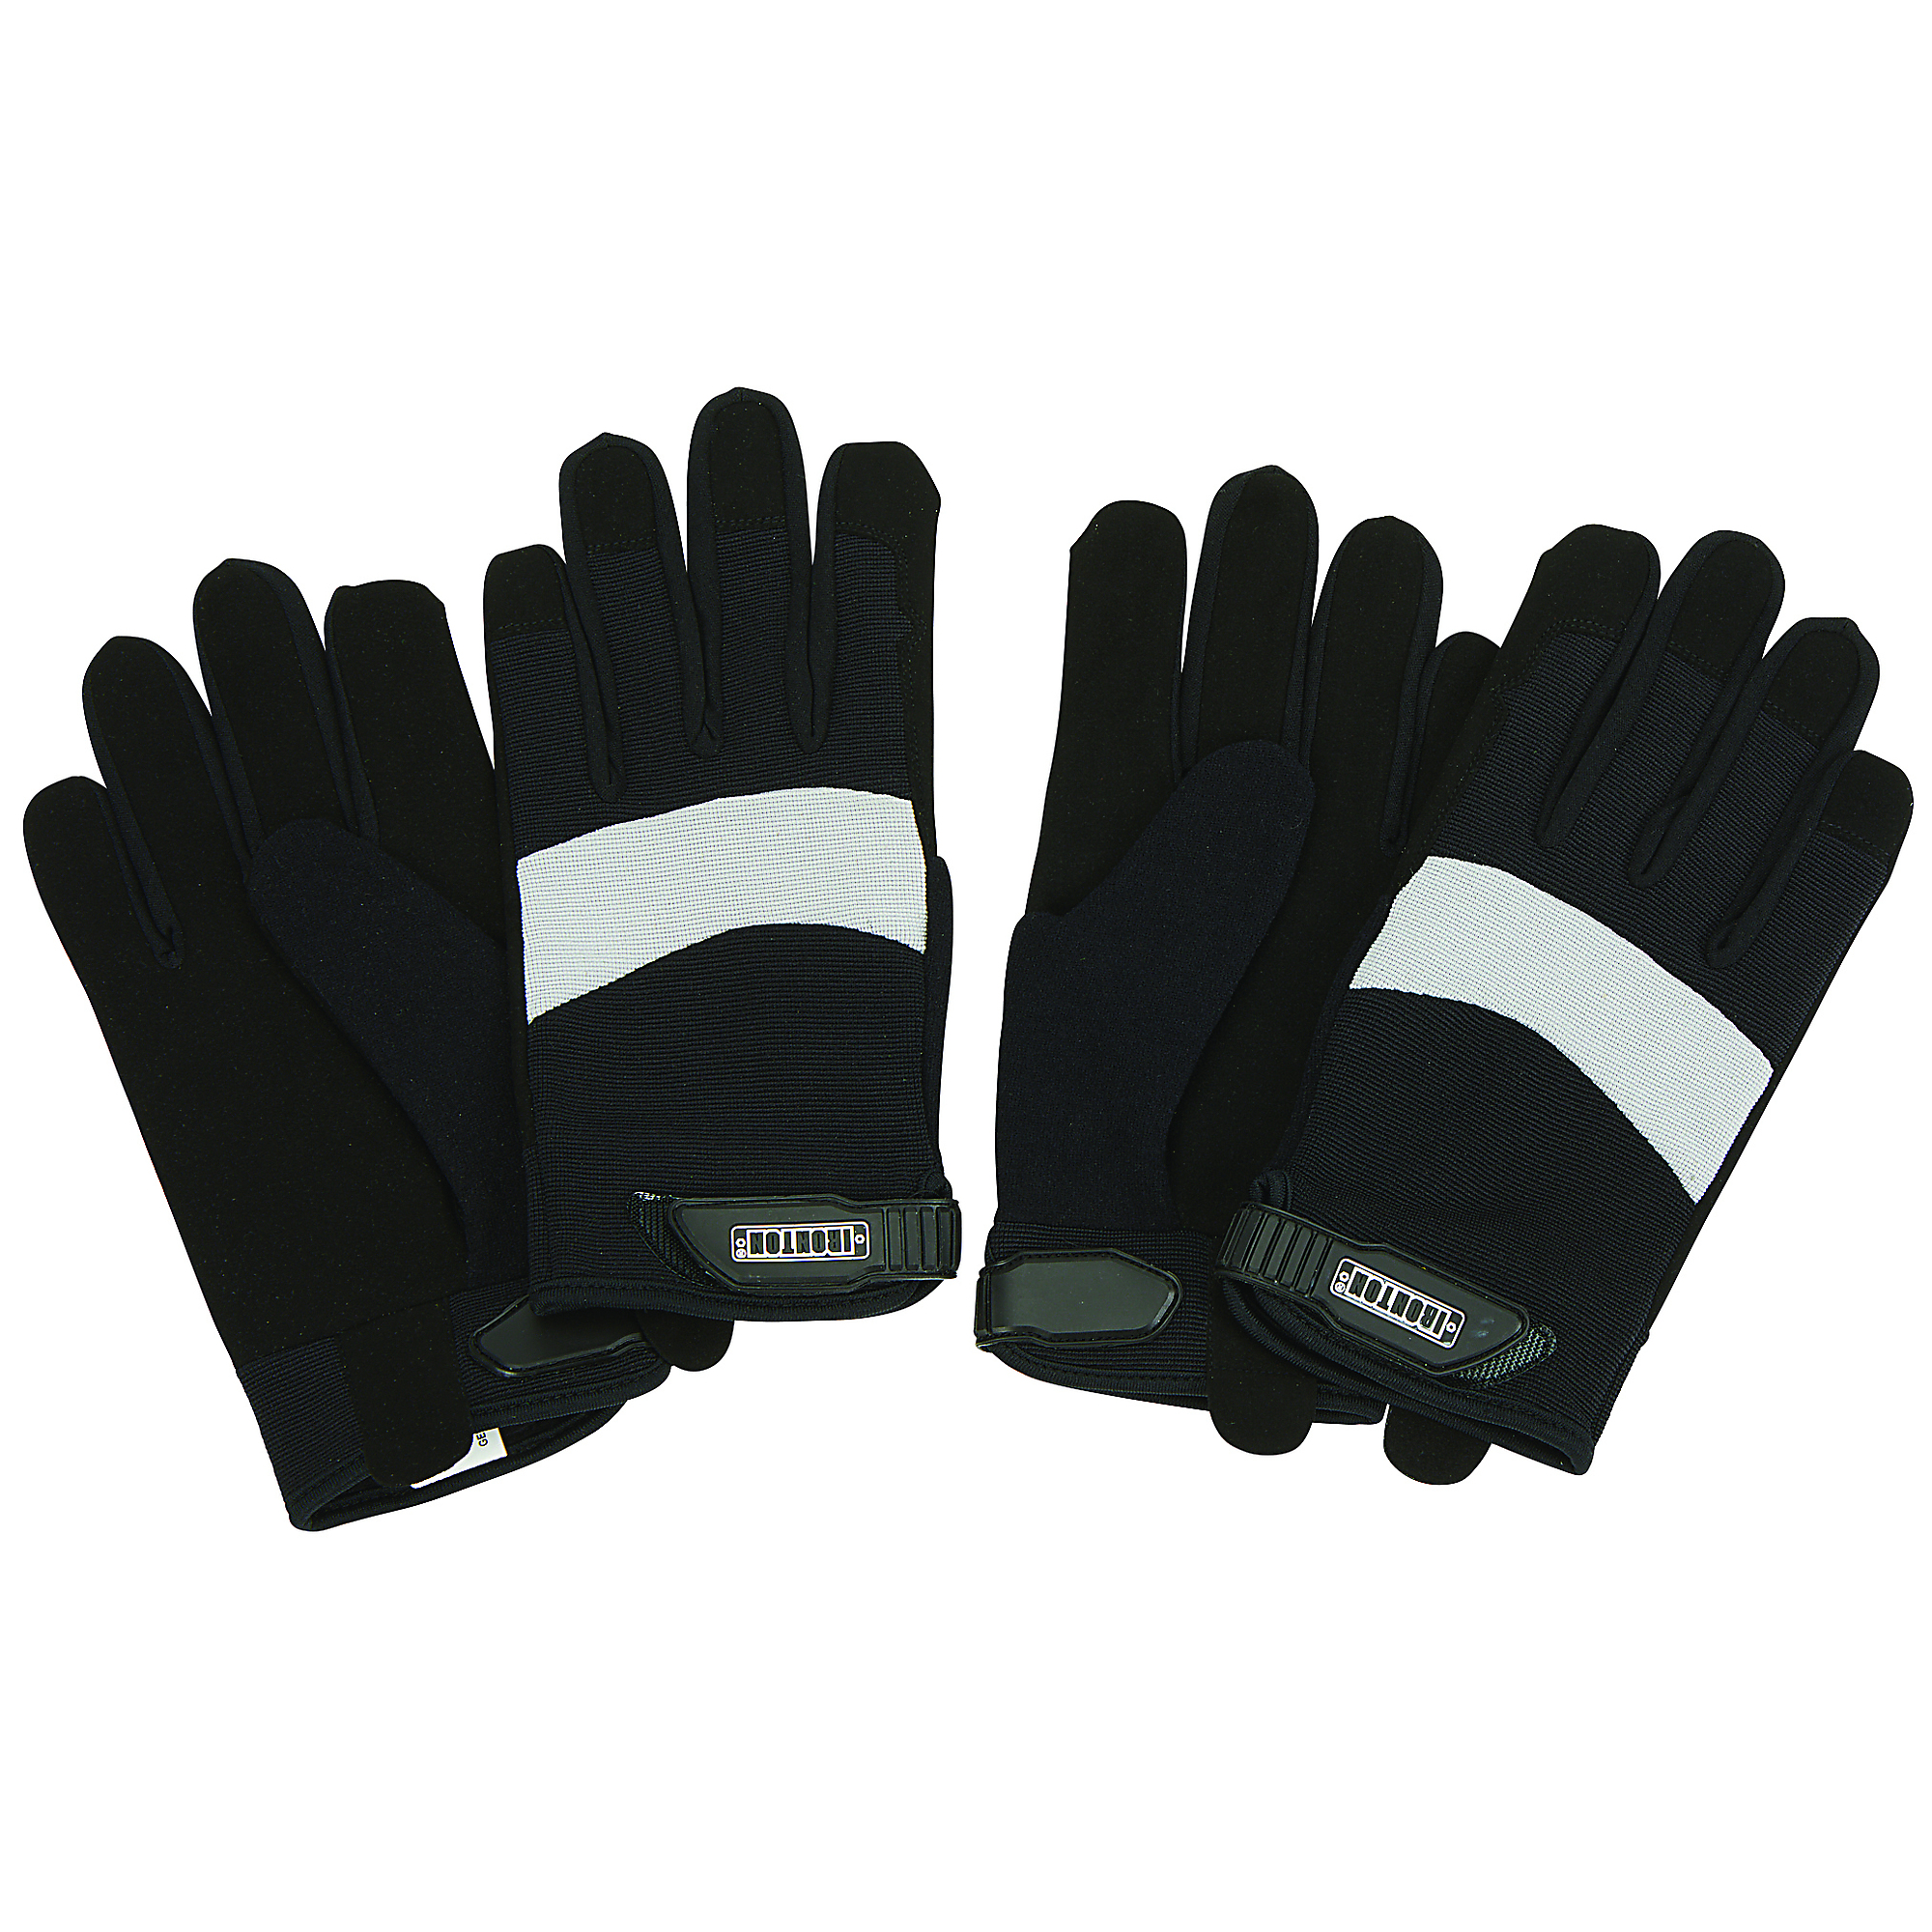 Ironton Men's High-Dexterity General-Purpose Work Gloves, 2 Pairs, Black/Gray, Medium